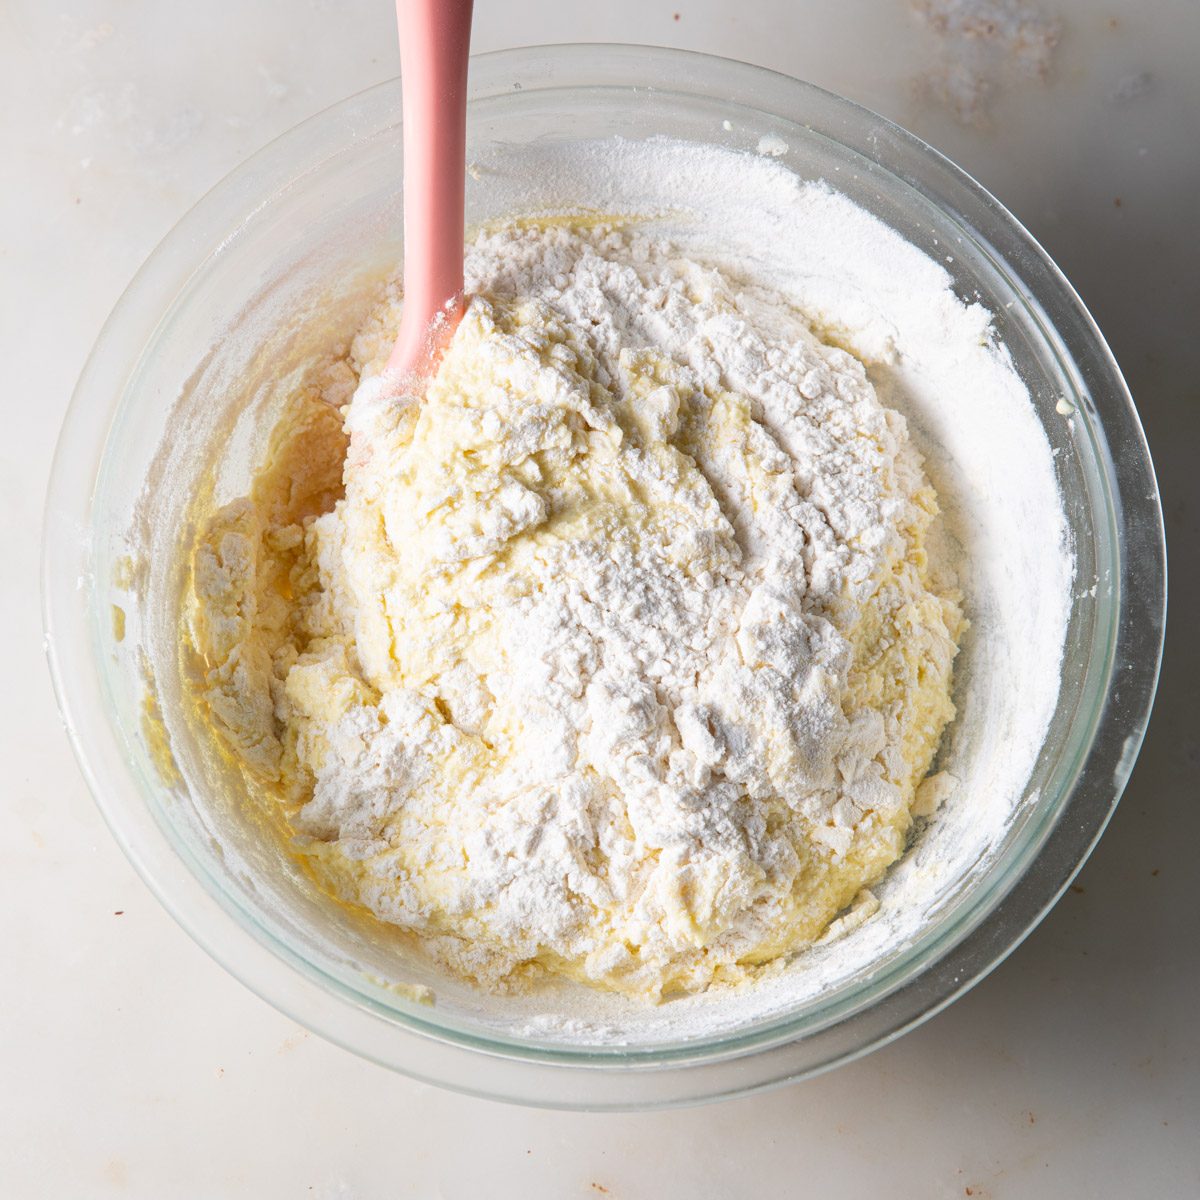 Stirring in the flour to a lemon loaf batter